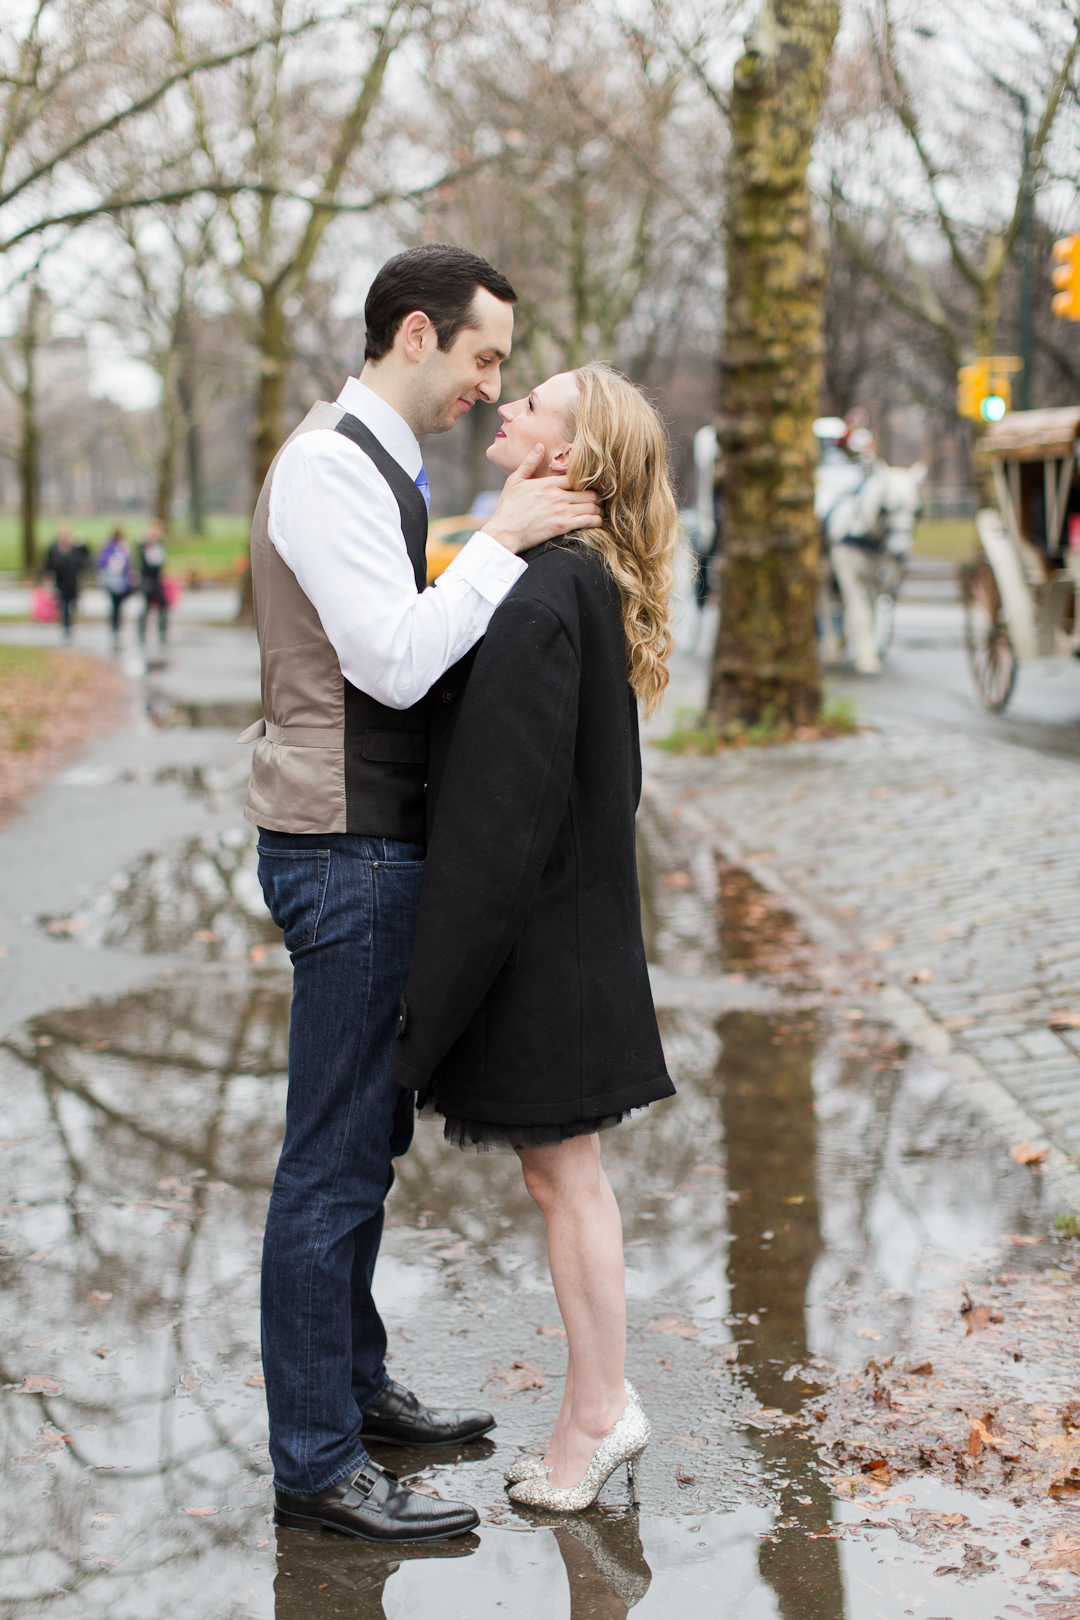 Melissa Kruse Photography - Jenna & Evan Central Park NYC Engagement Photos-65.jpg